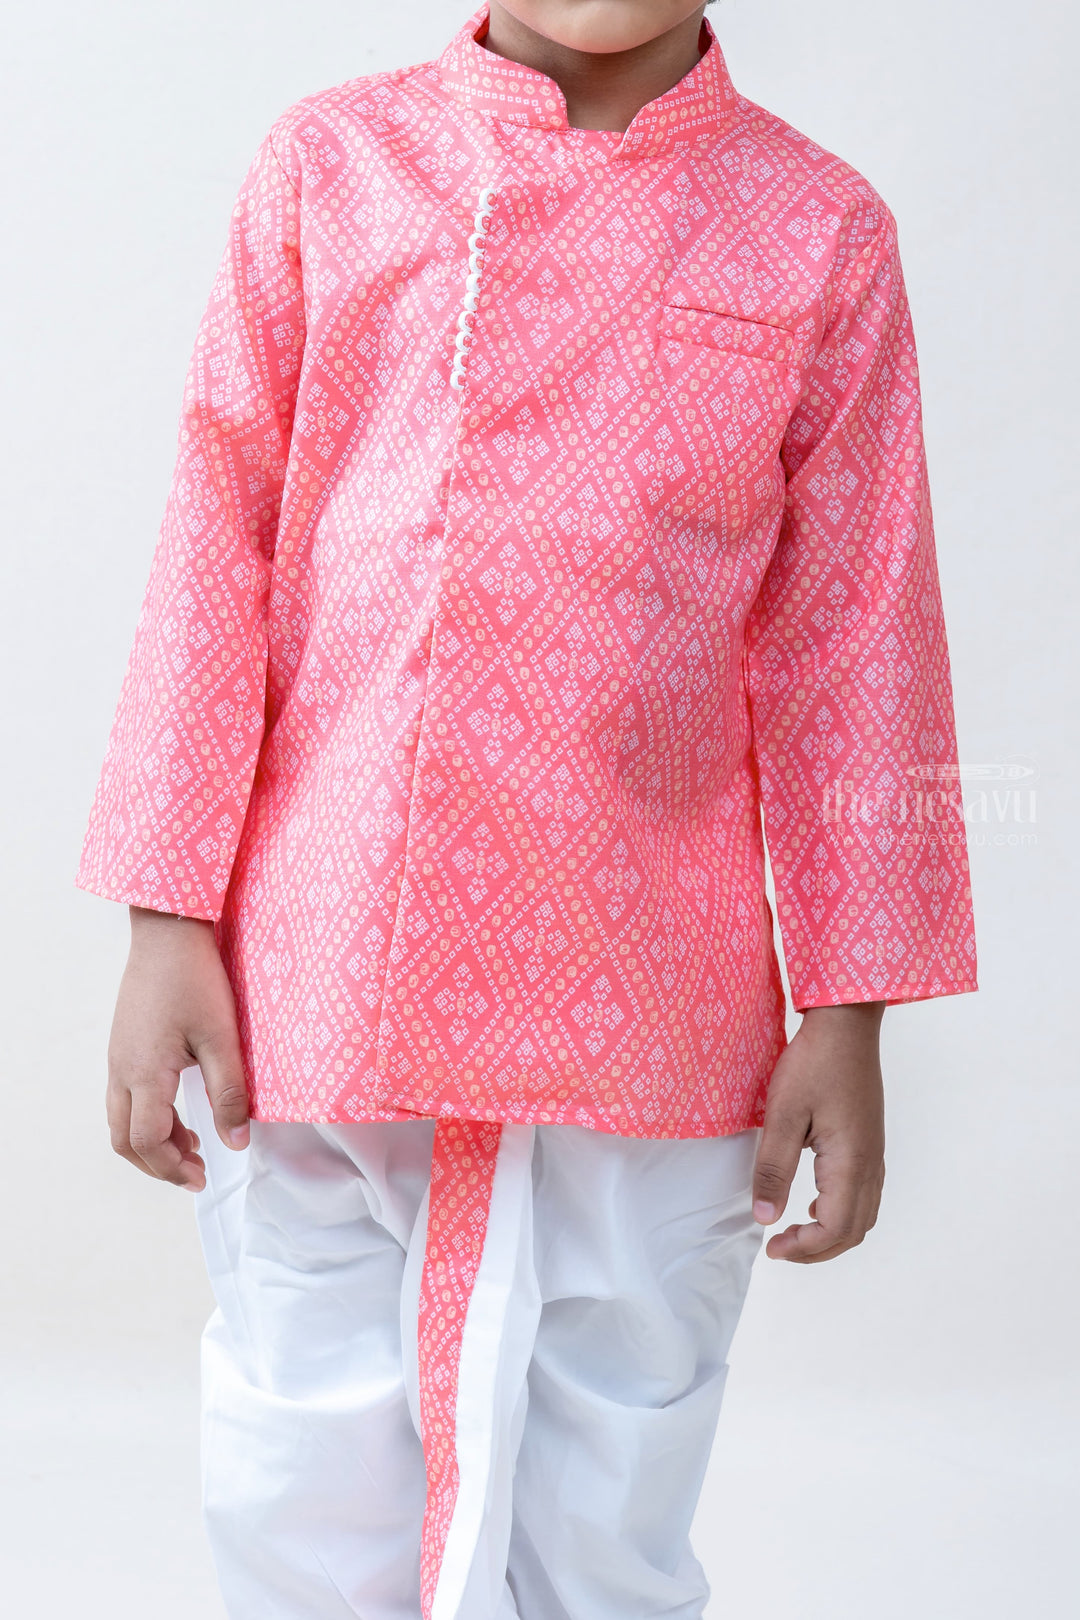 The Nesavu Ethnic Sets Eye Candy Prints - Pleasing Pink Kurta With Panchakacham White For Little Boys psr silks Nesavu